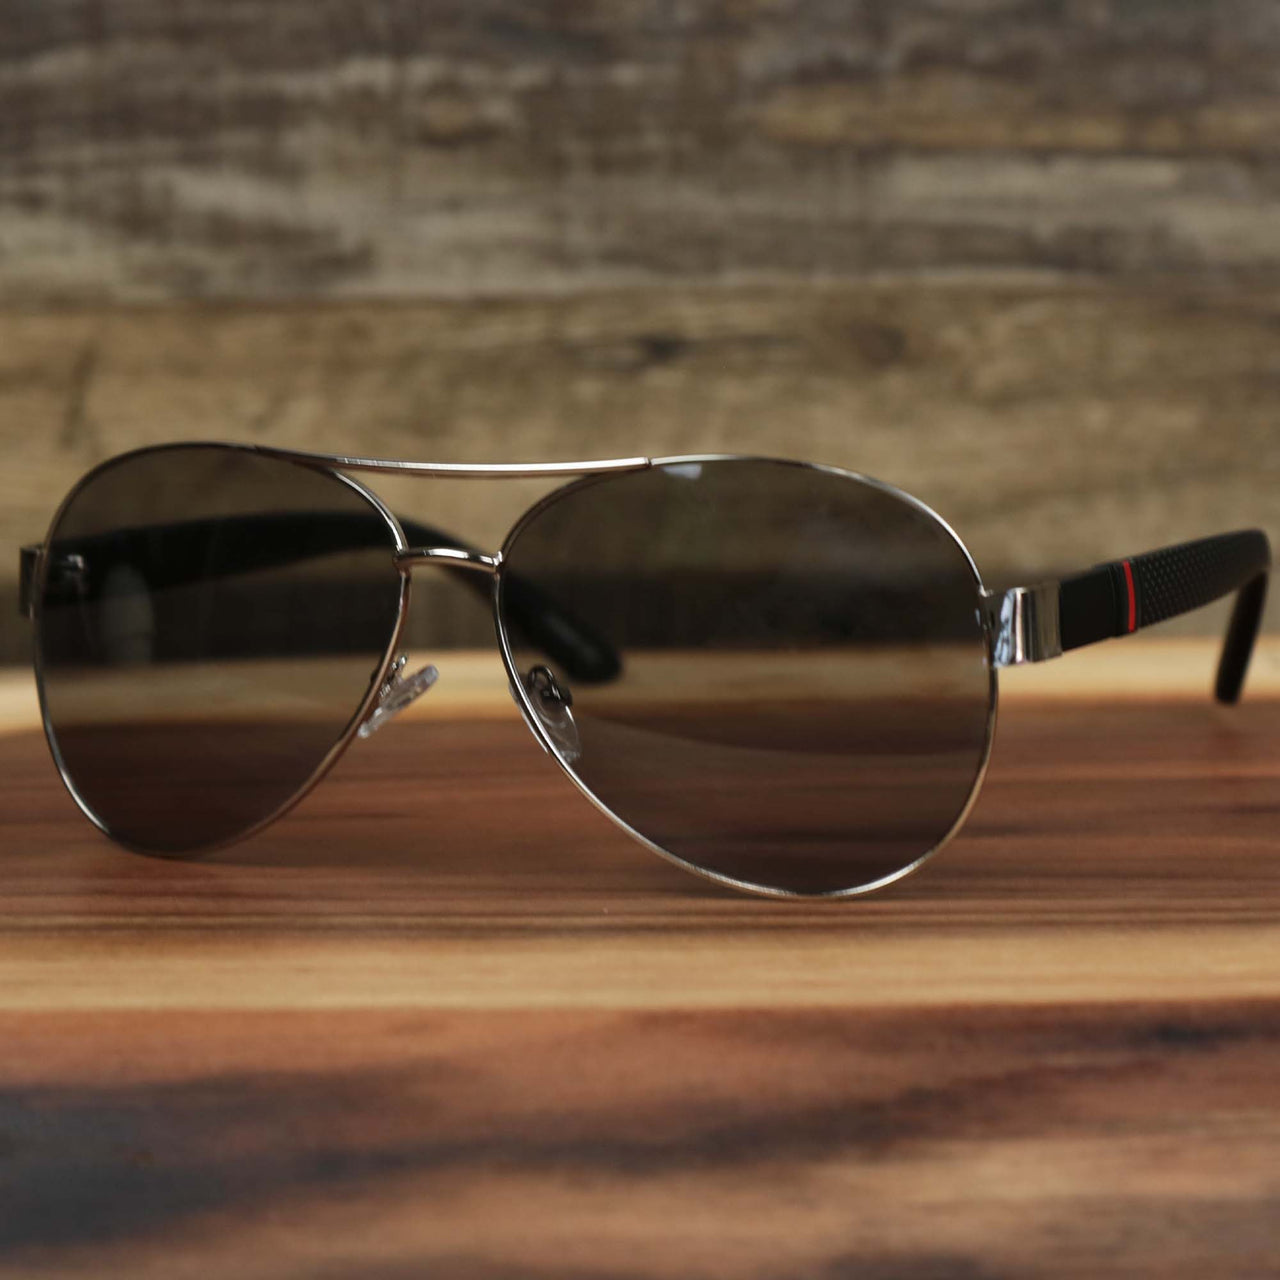 The Aviator Frame Racing Stripes Black Lens Sunglasses with Silver Frame